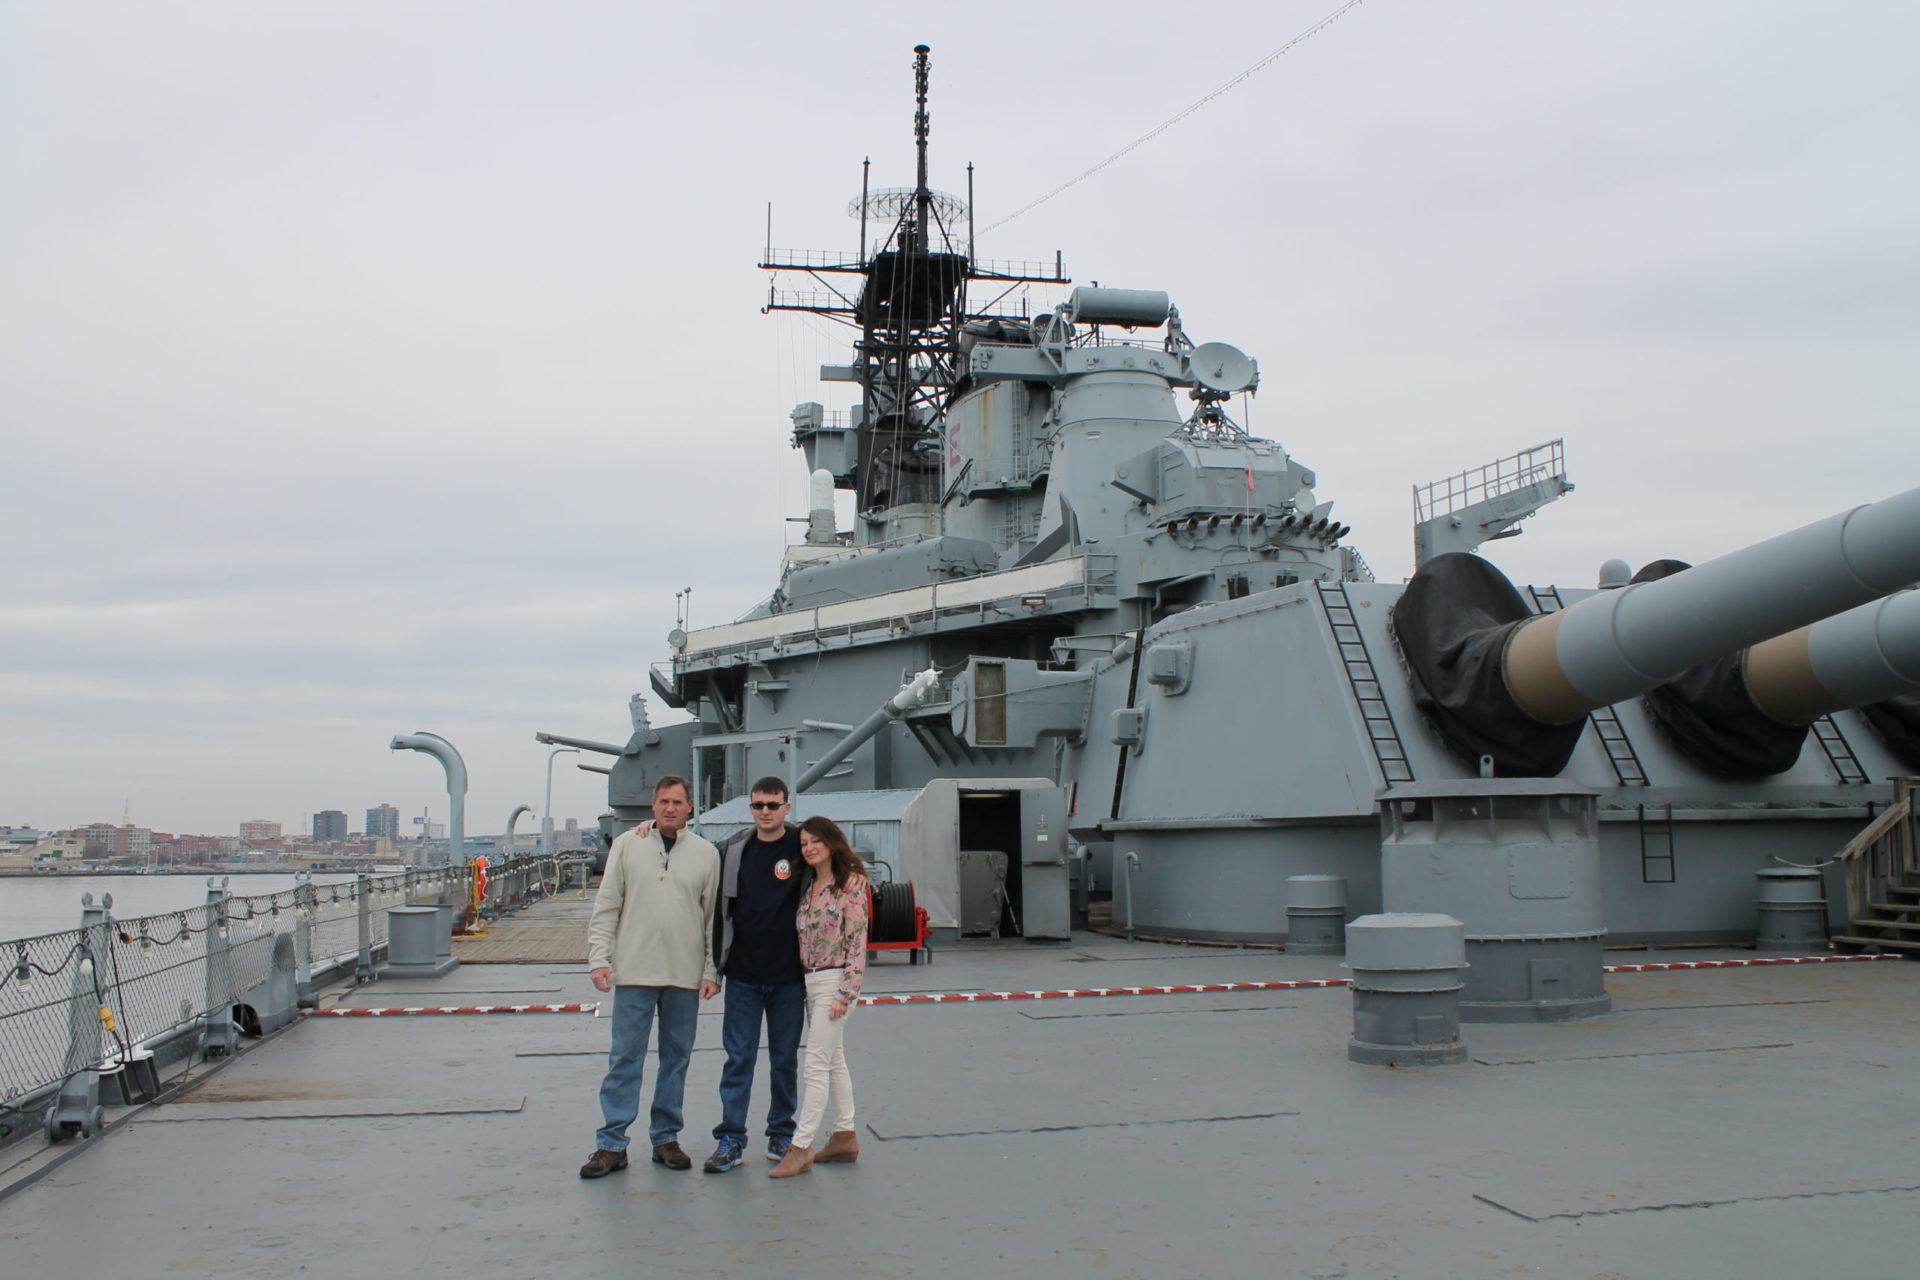 Hunter Hiros (center) with dad John and mom Jennifer Hiros on the USS Battleship New Jersey